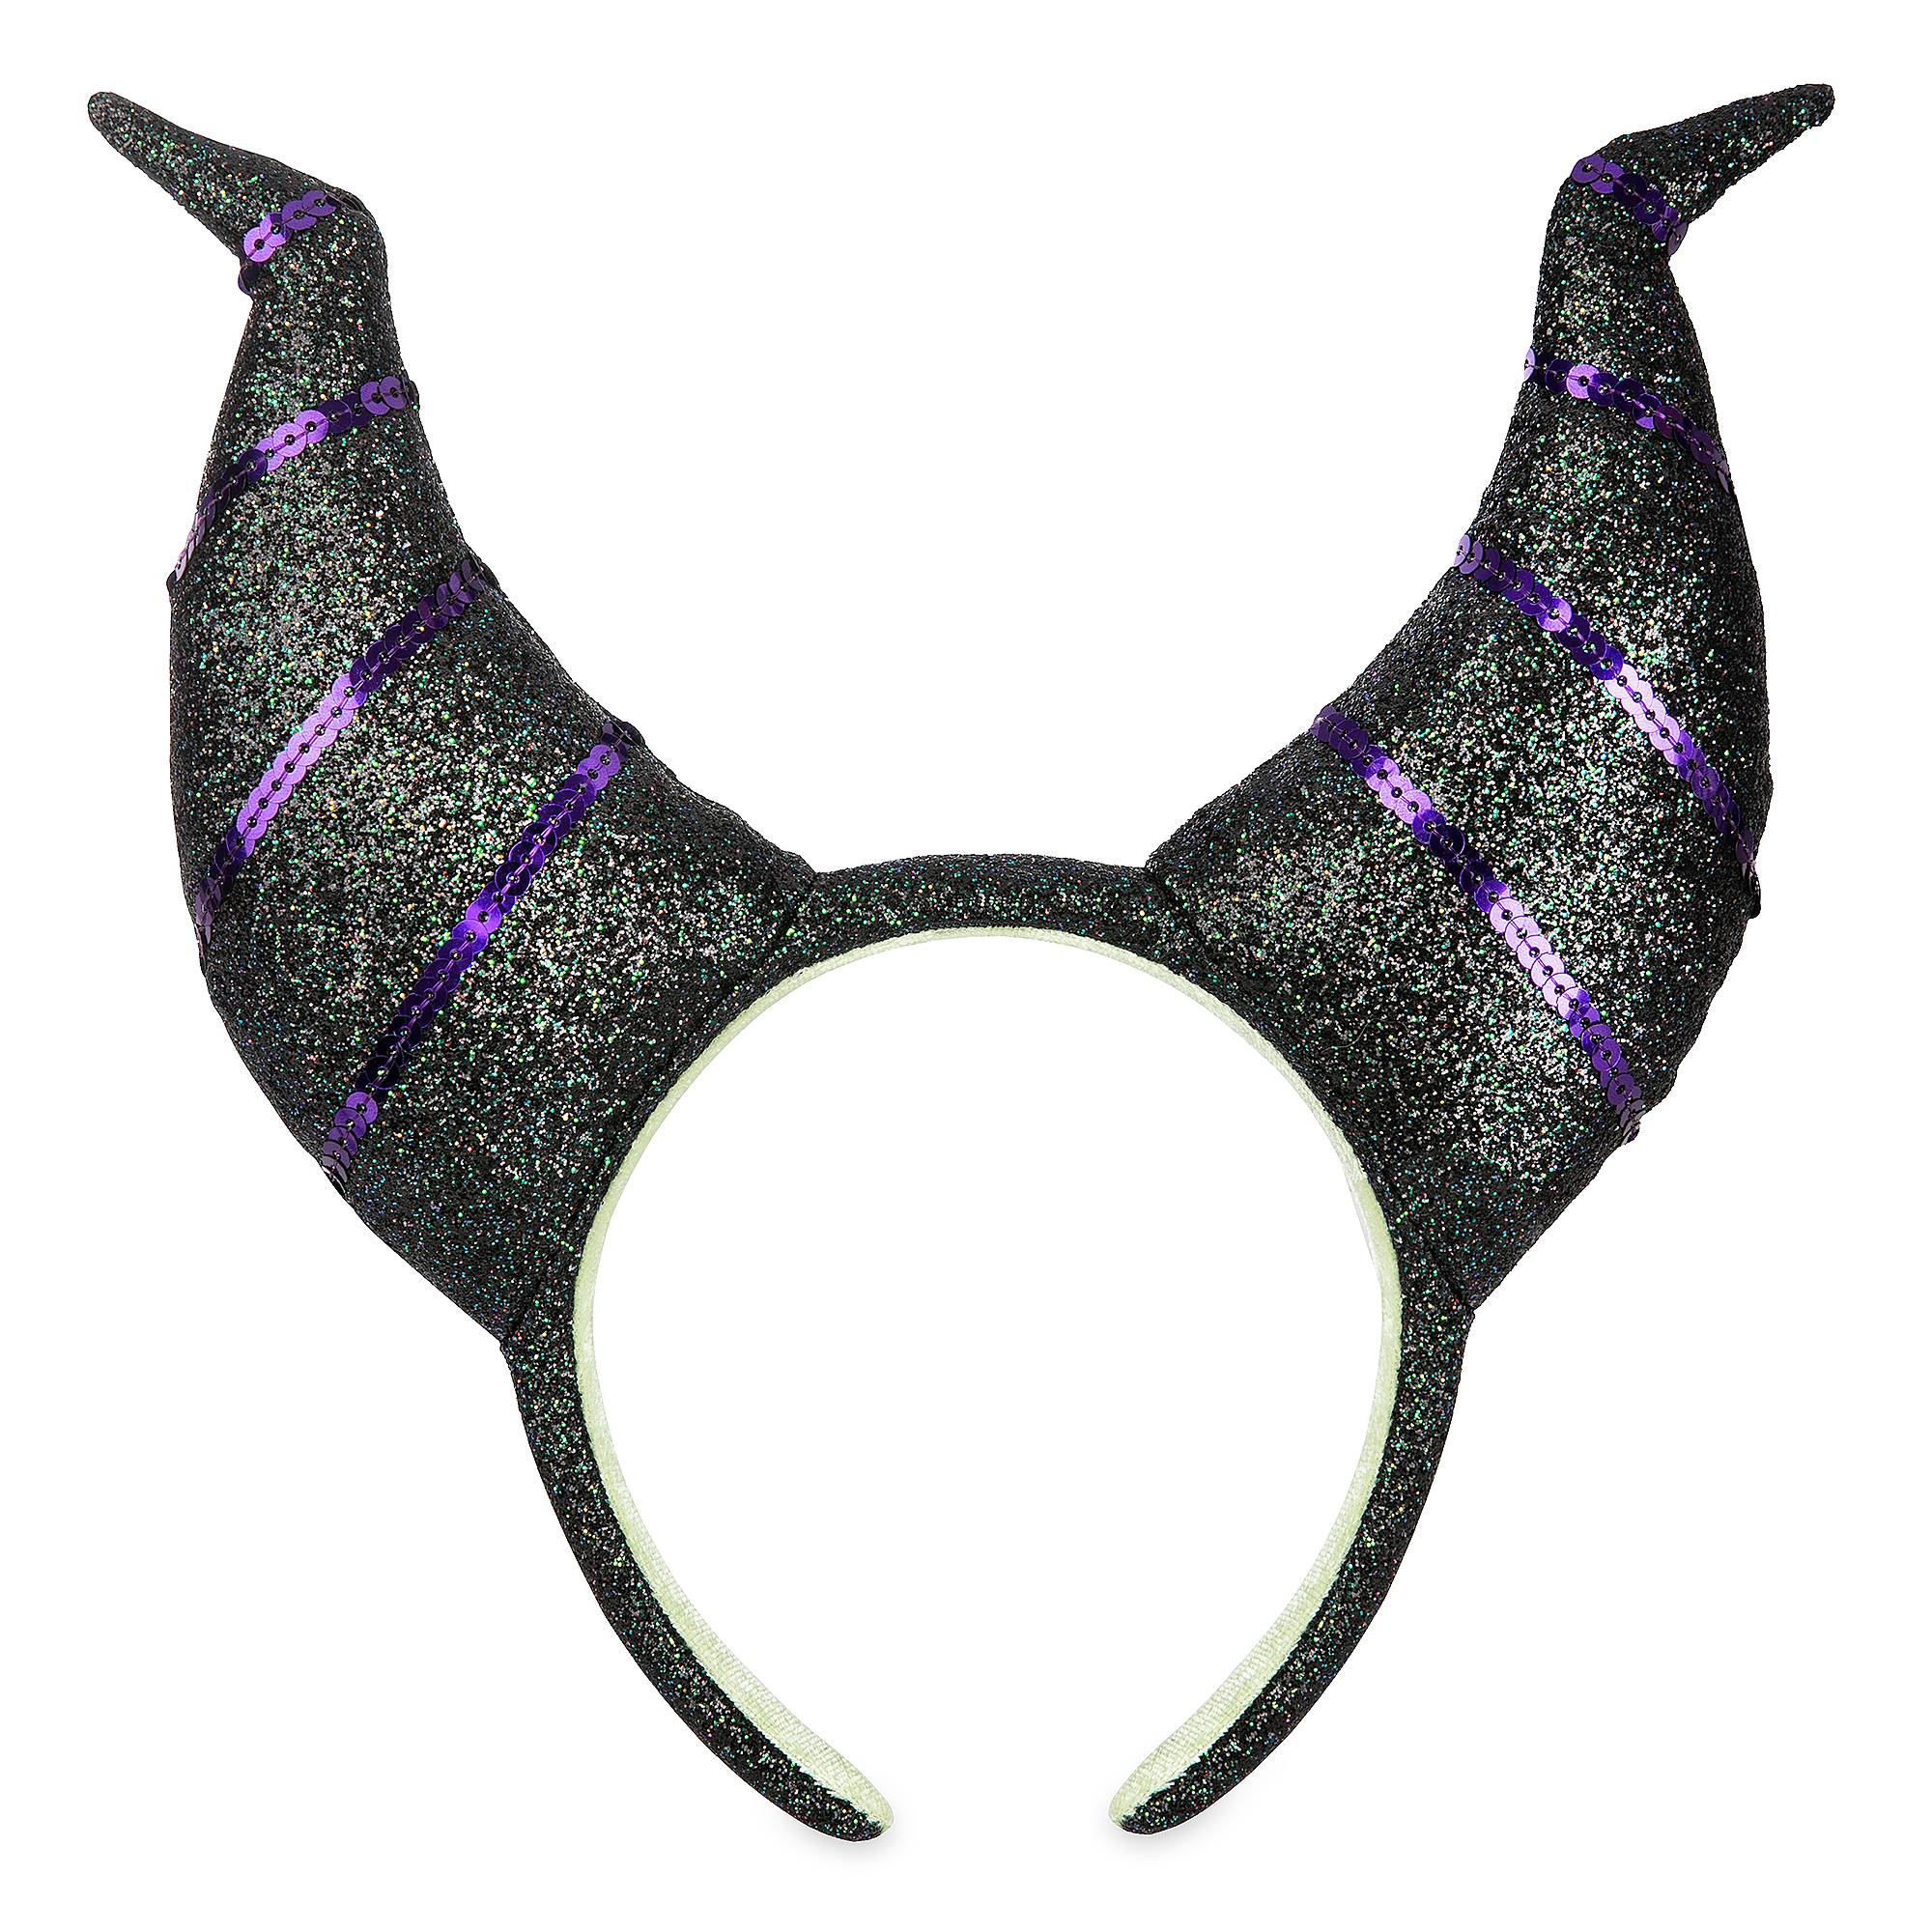 Maleficent Horned Headband – Sleeping Beauty image